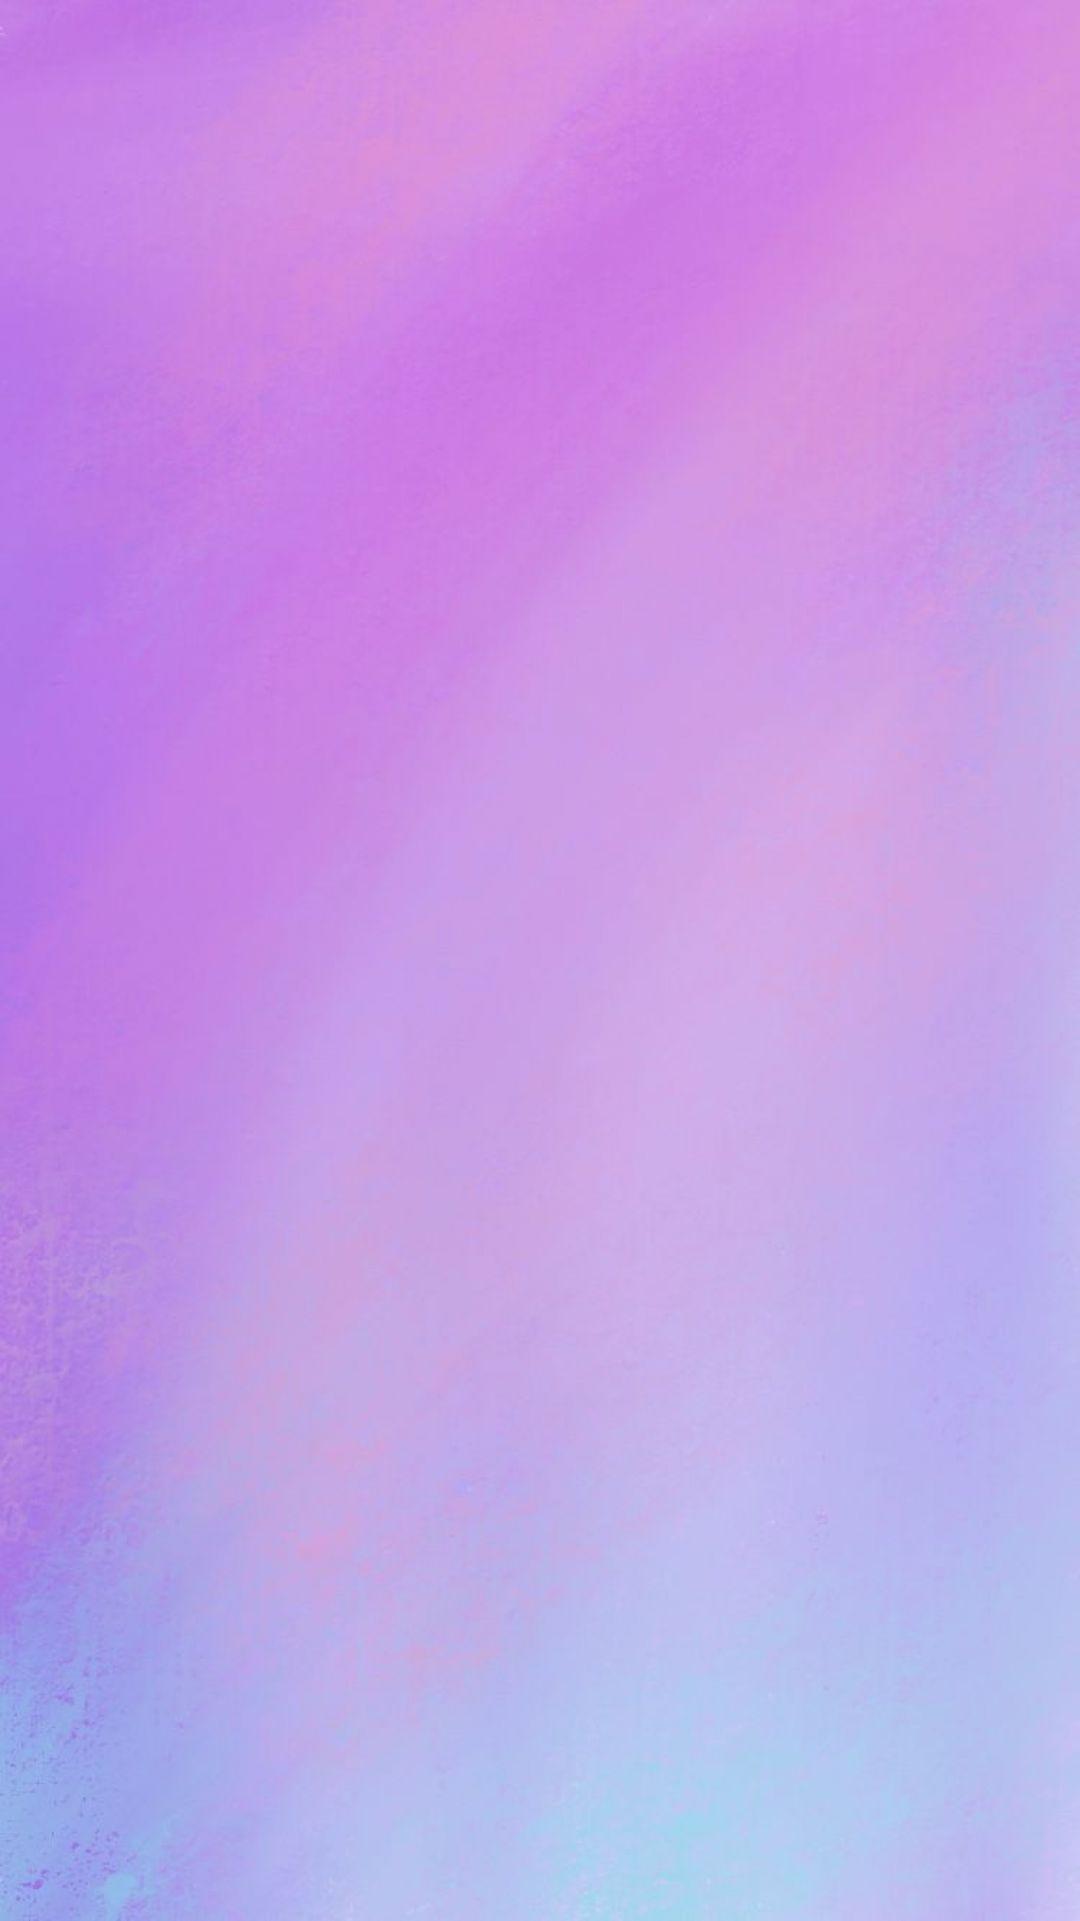 Pastel Purple iPhone Wallpapers - Top Free Pastel Purple iPhone